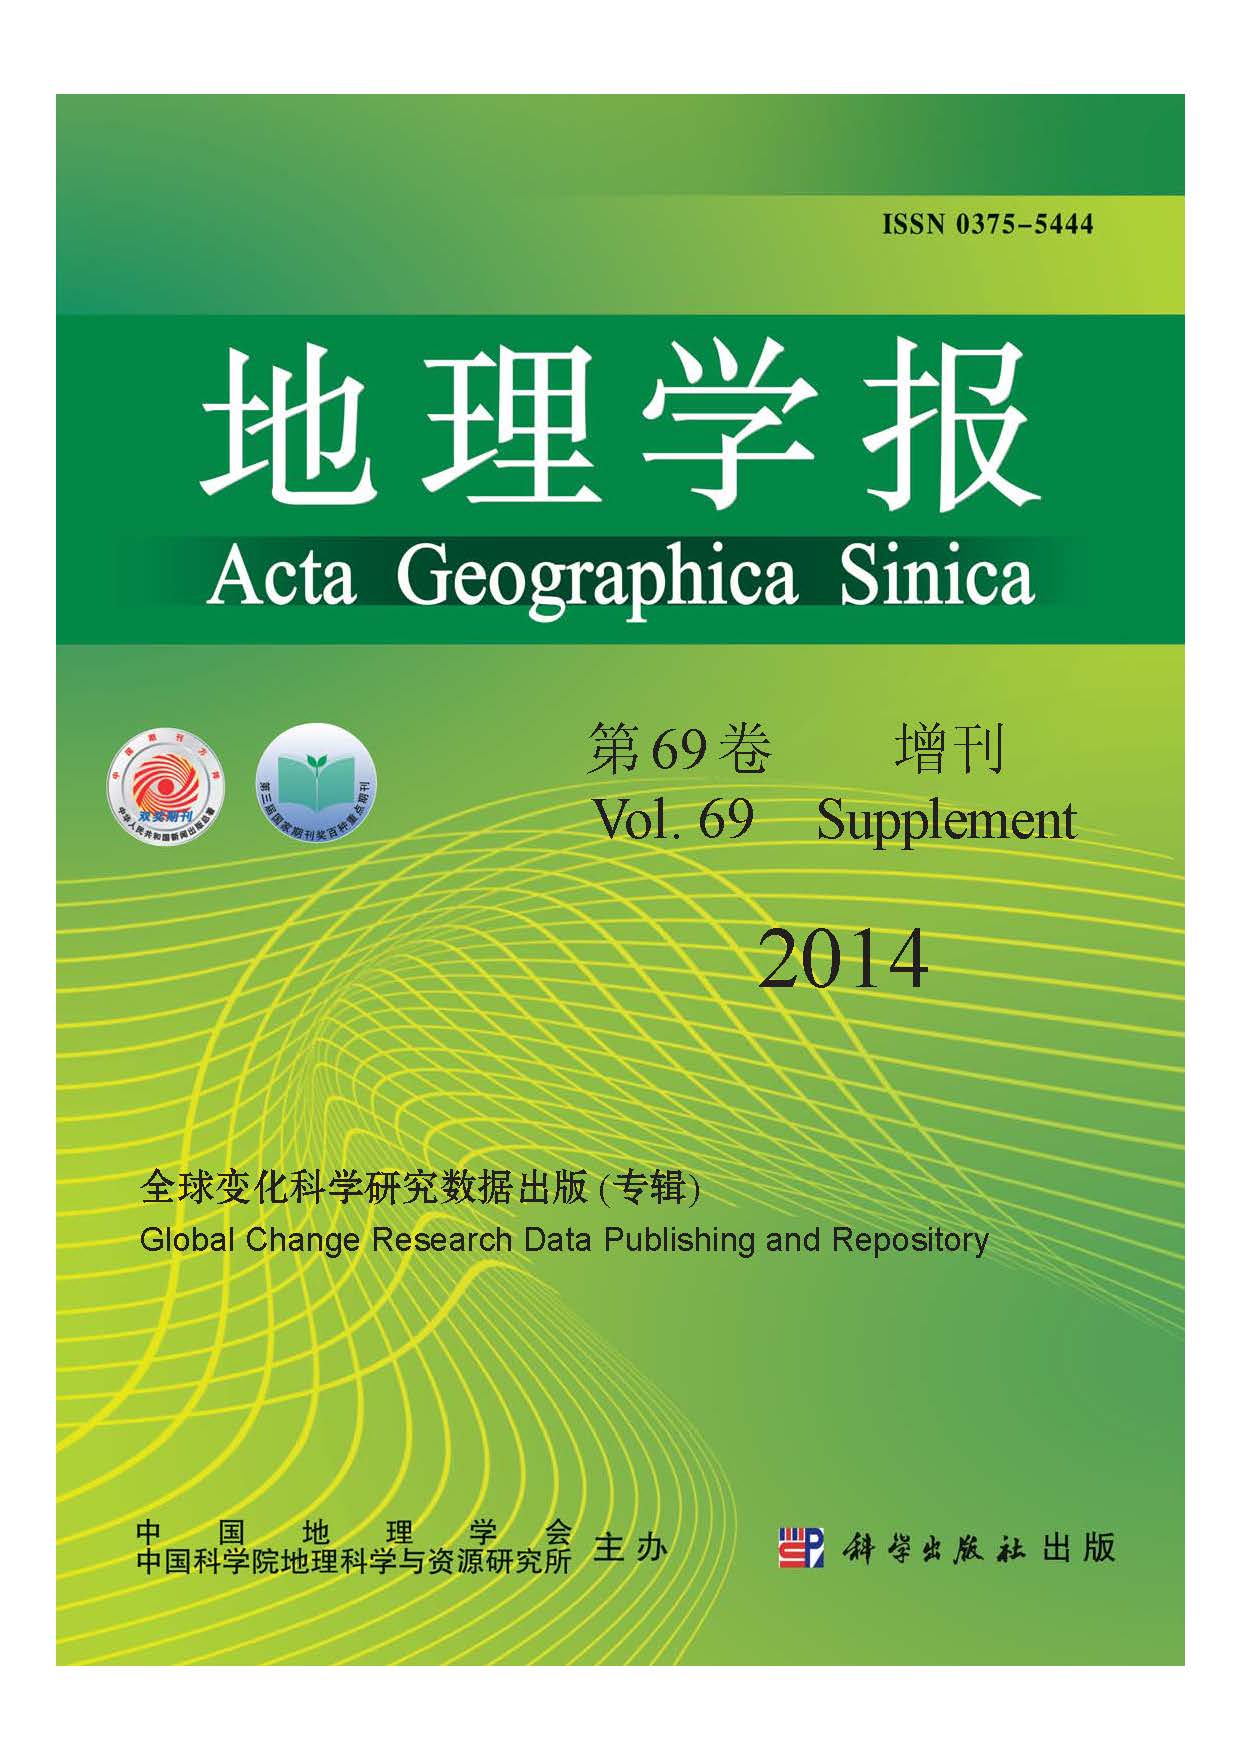 Acta Geographica Sinica